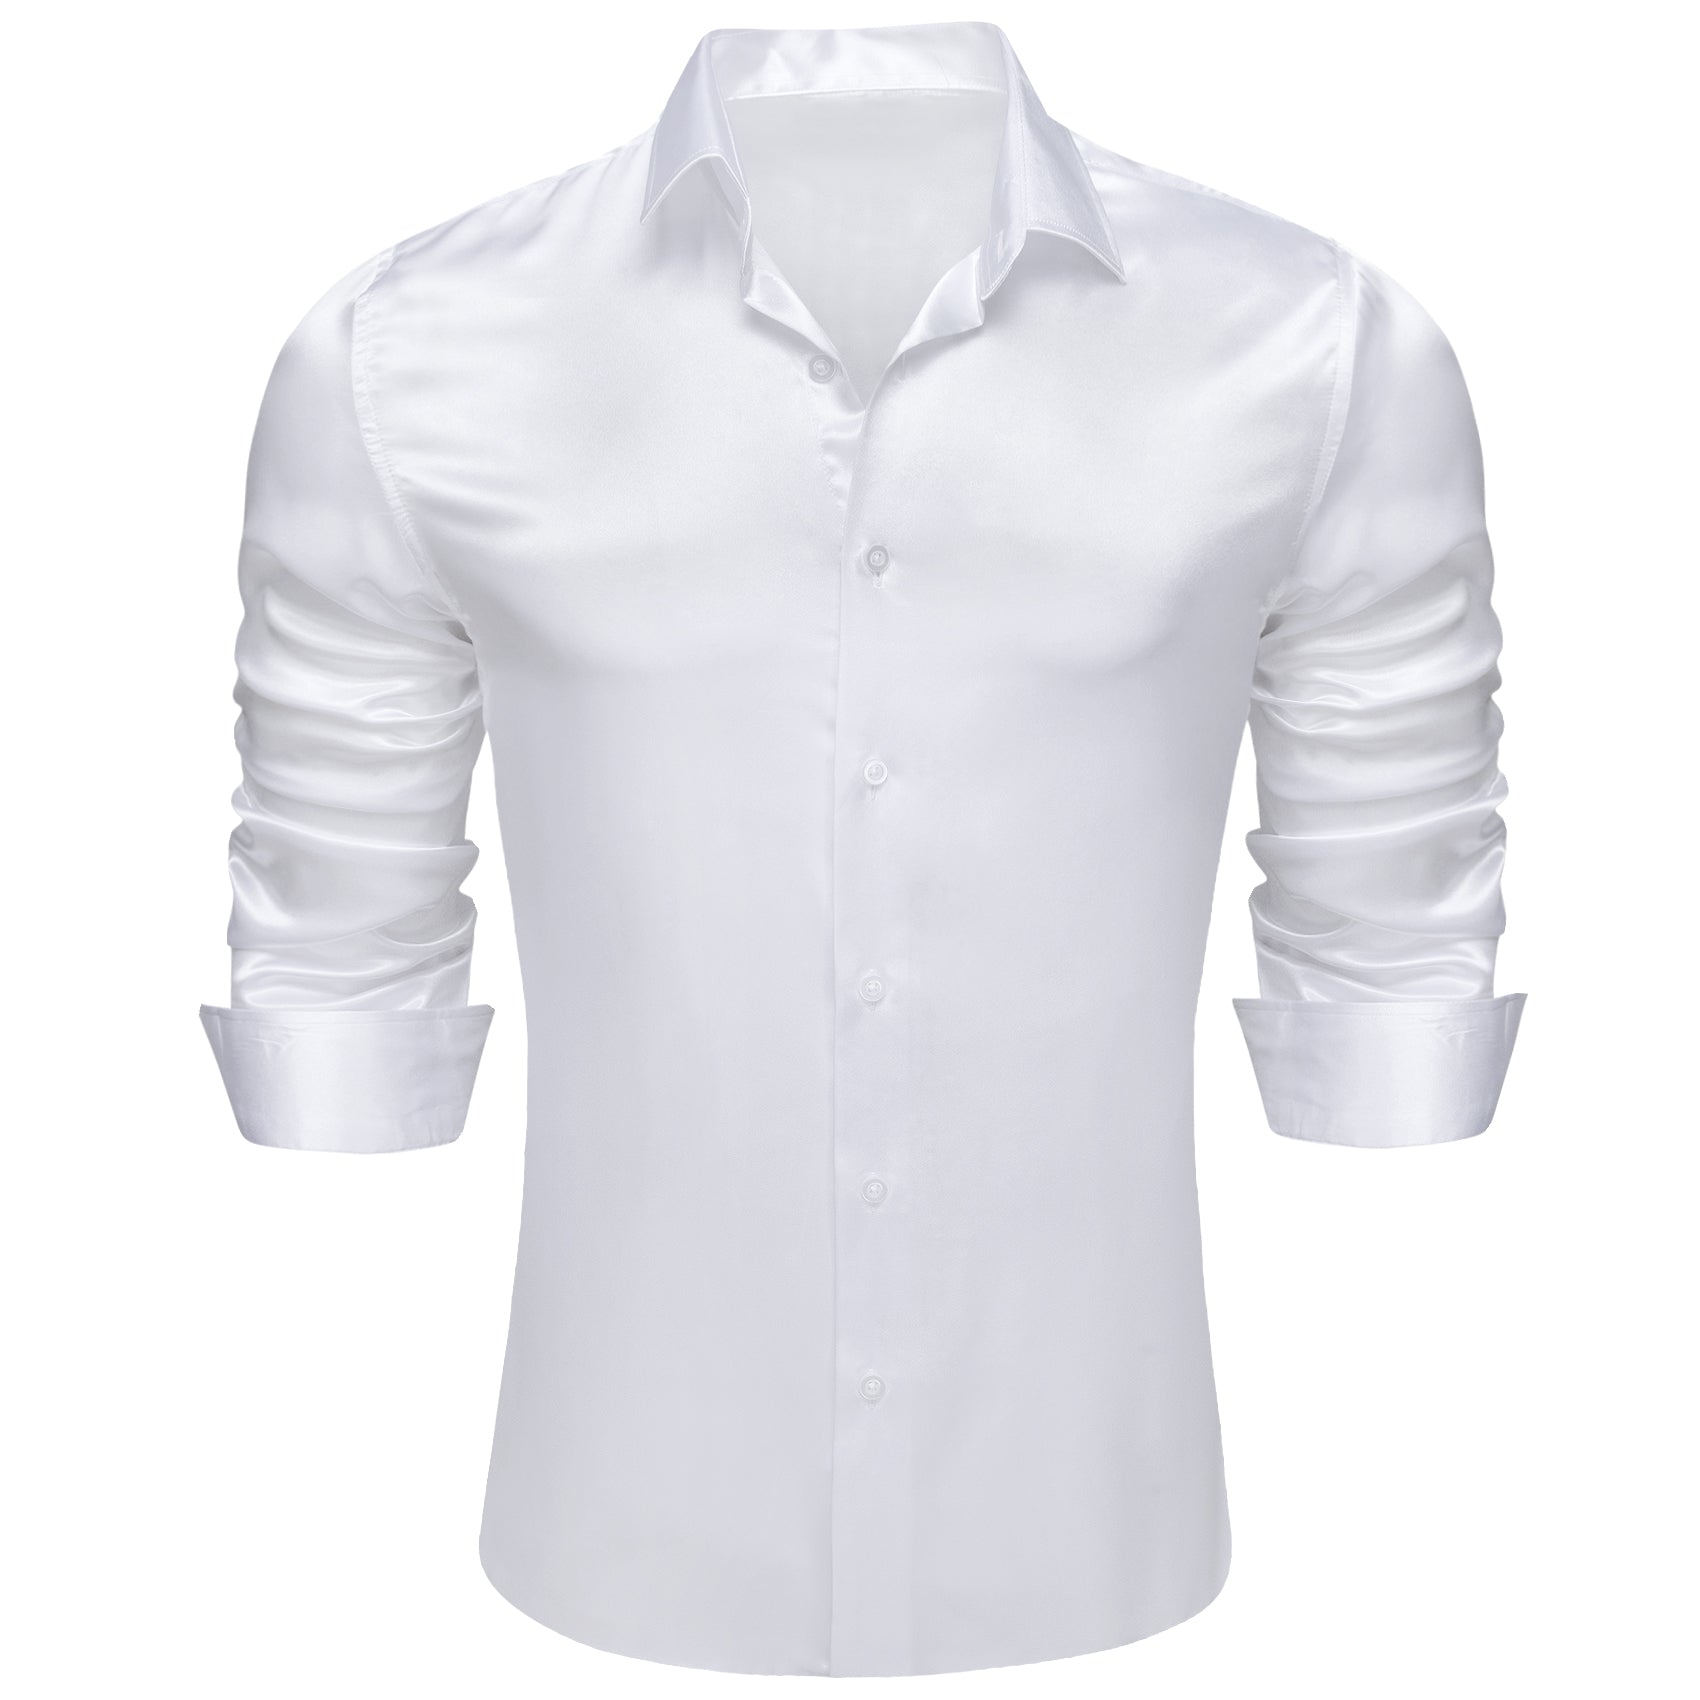 Barry.wang White Solid Silk Shirt